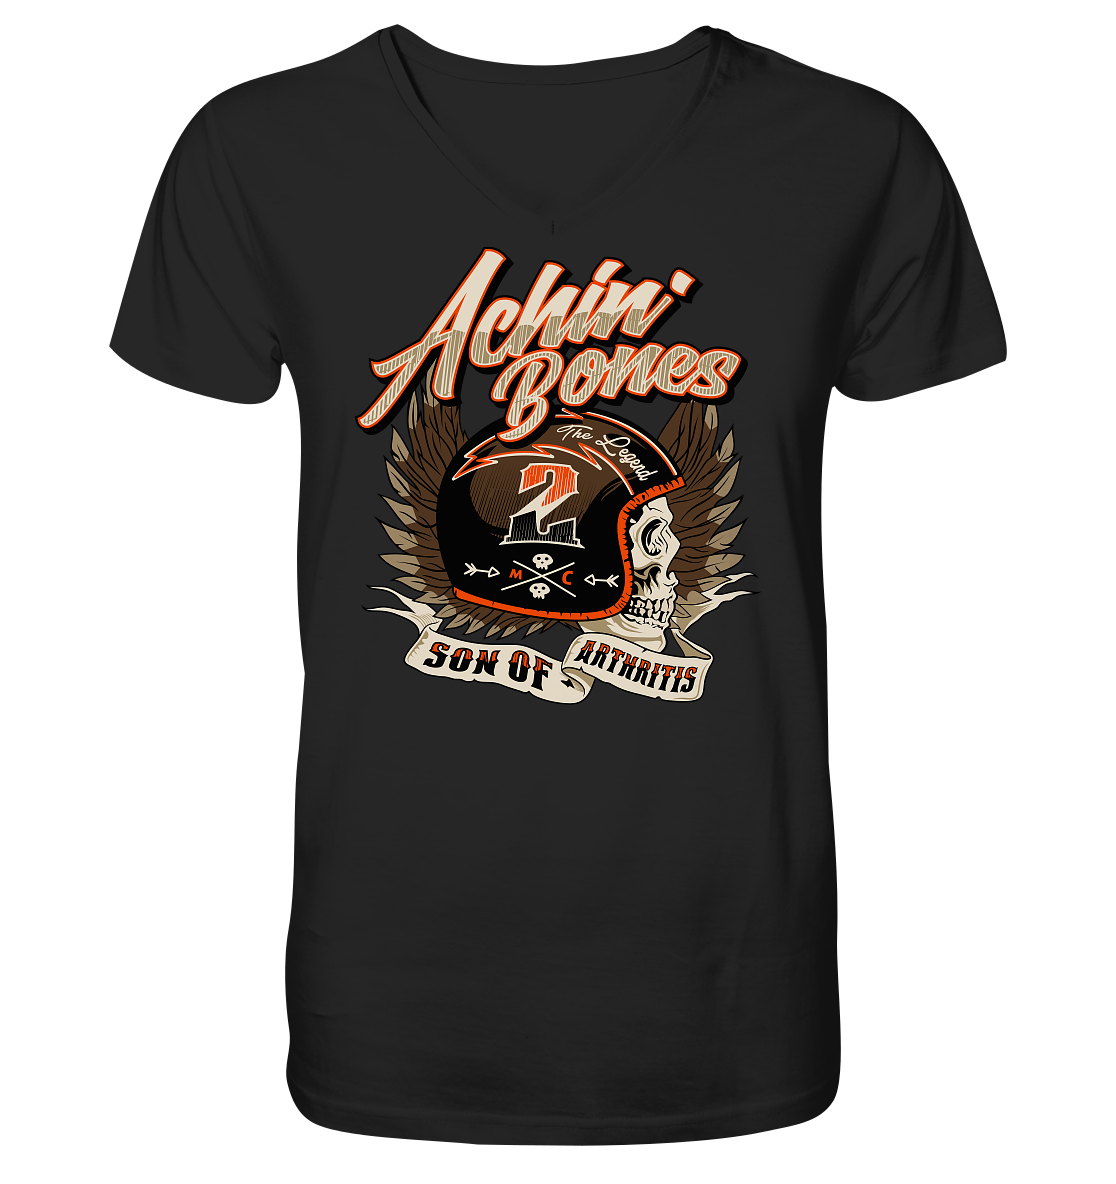 Sons of Arthritis - Achin Bones - V-Neck Shirt. Motiv Vorderseite.